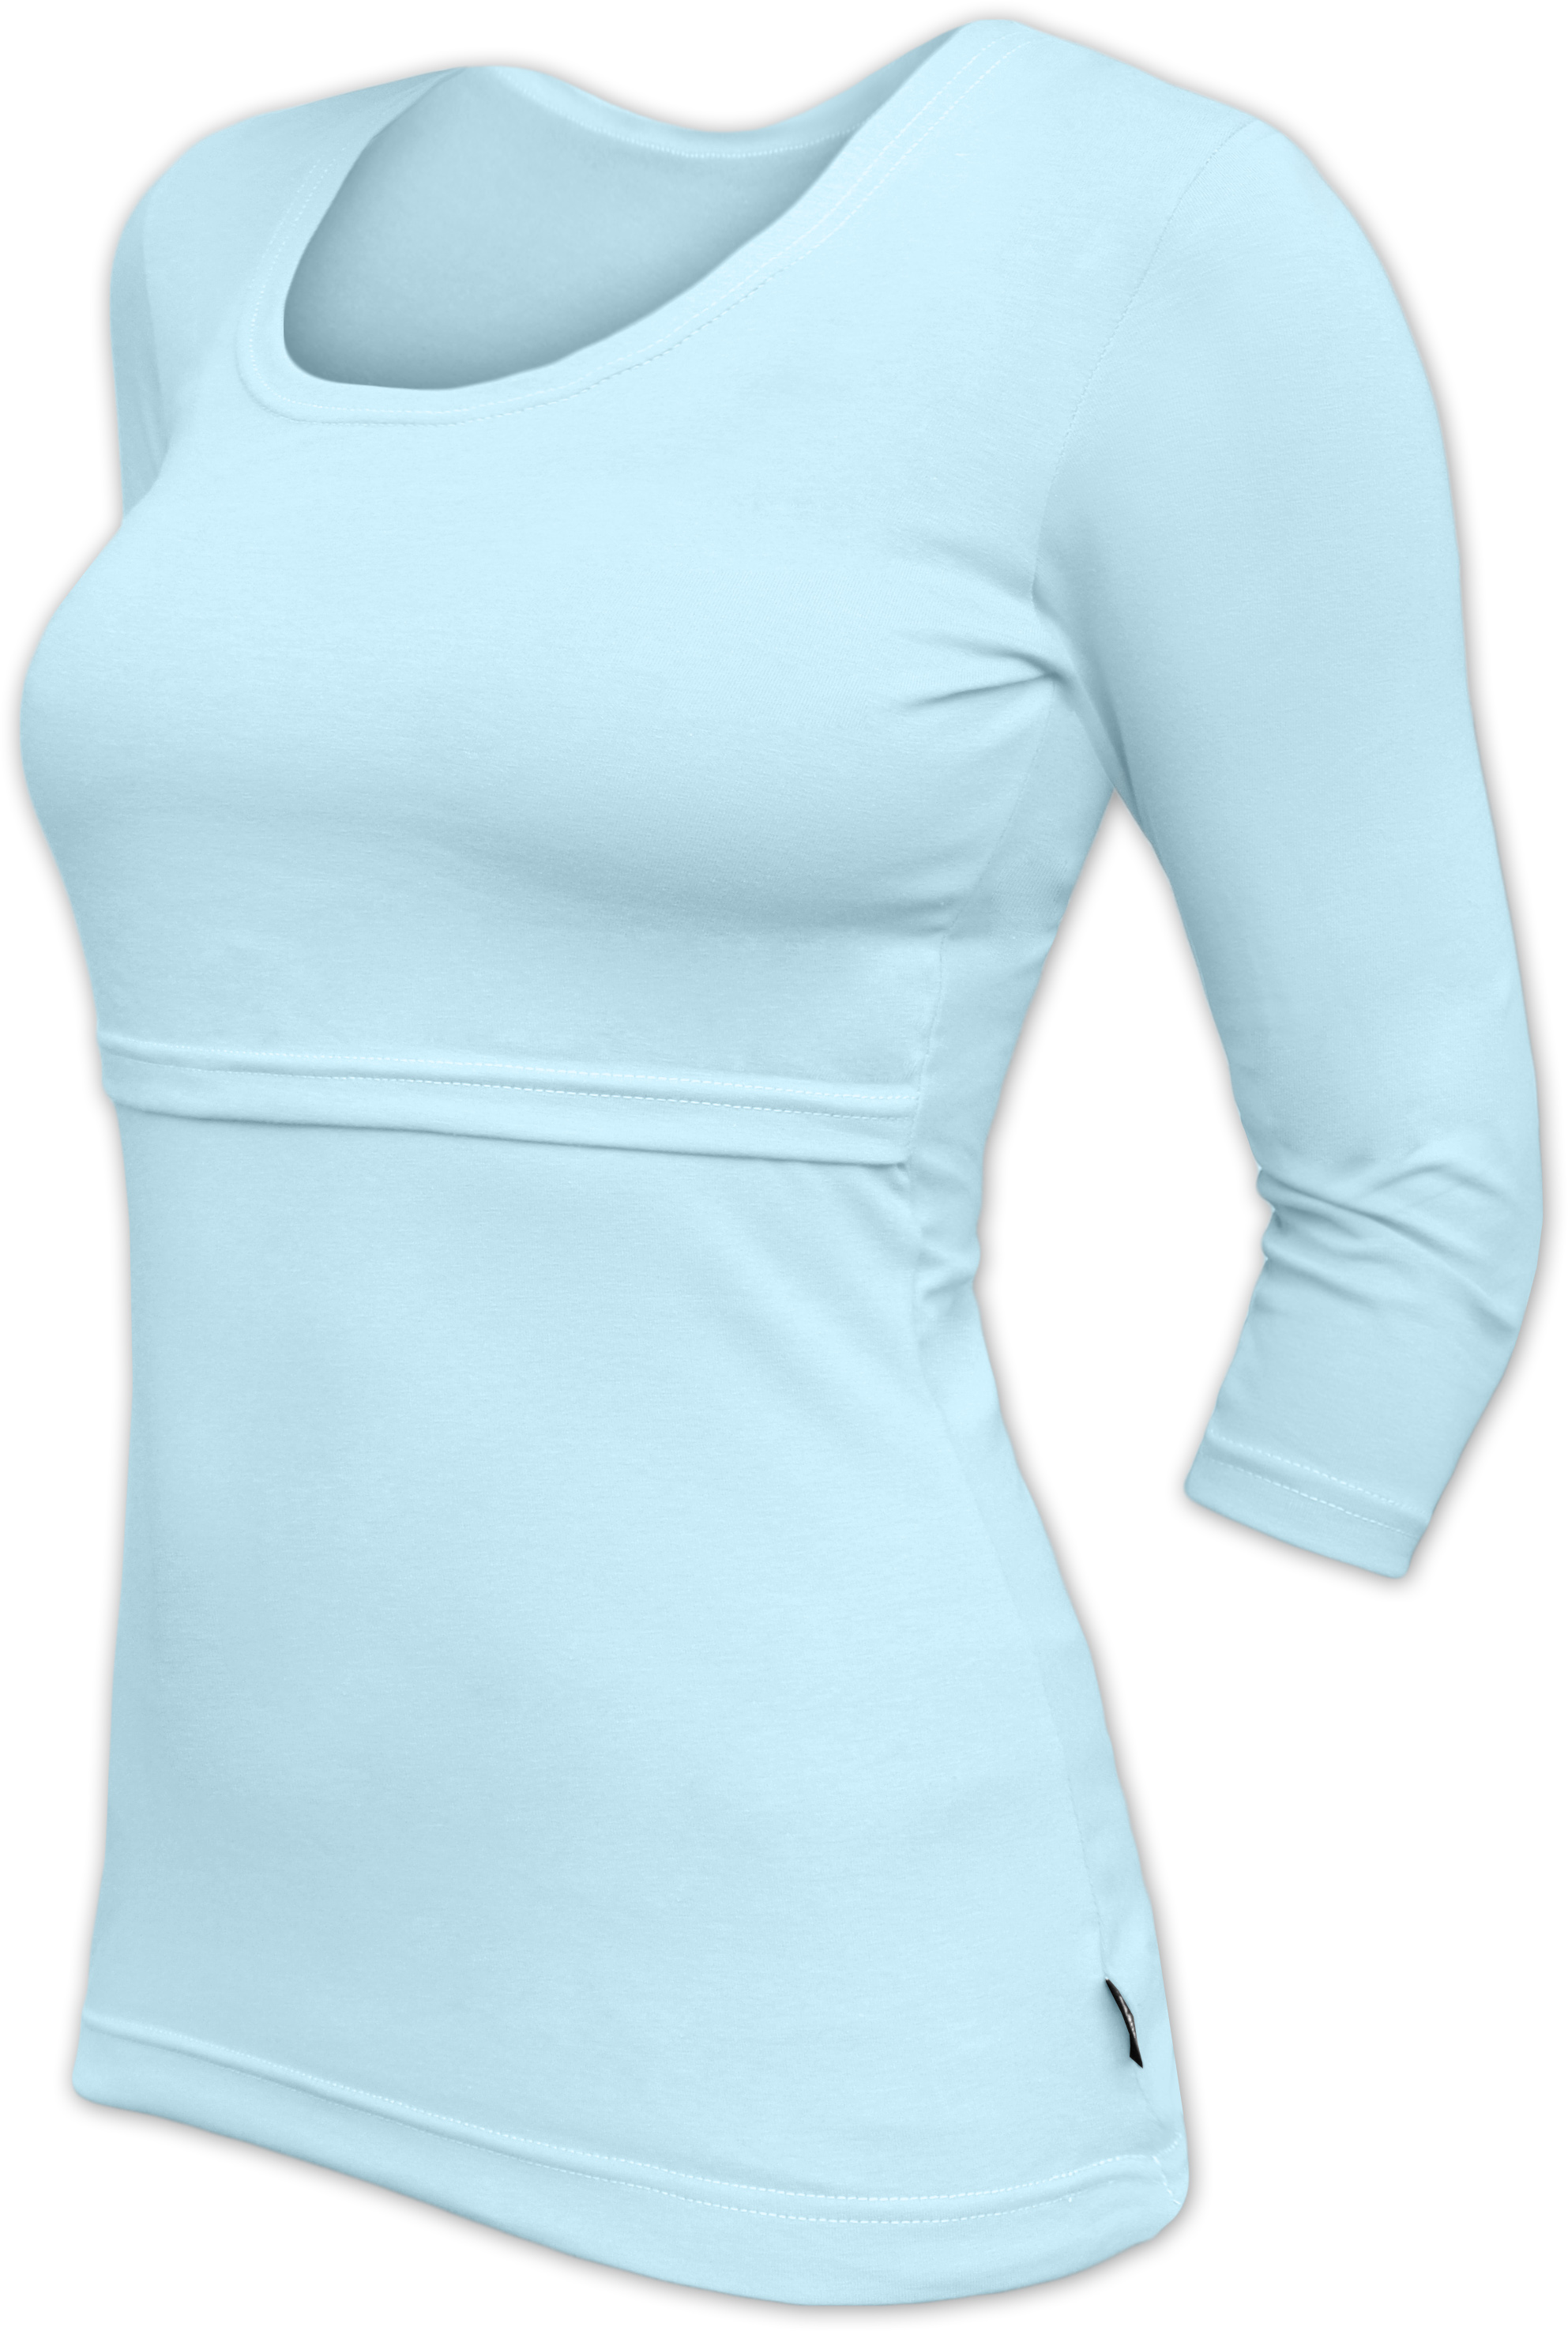 Breast-feeding T-shirt 01 Katerina, 3/4 sleeves, LIGHT BLUE